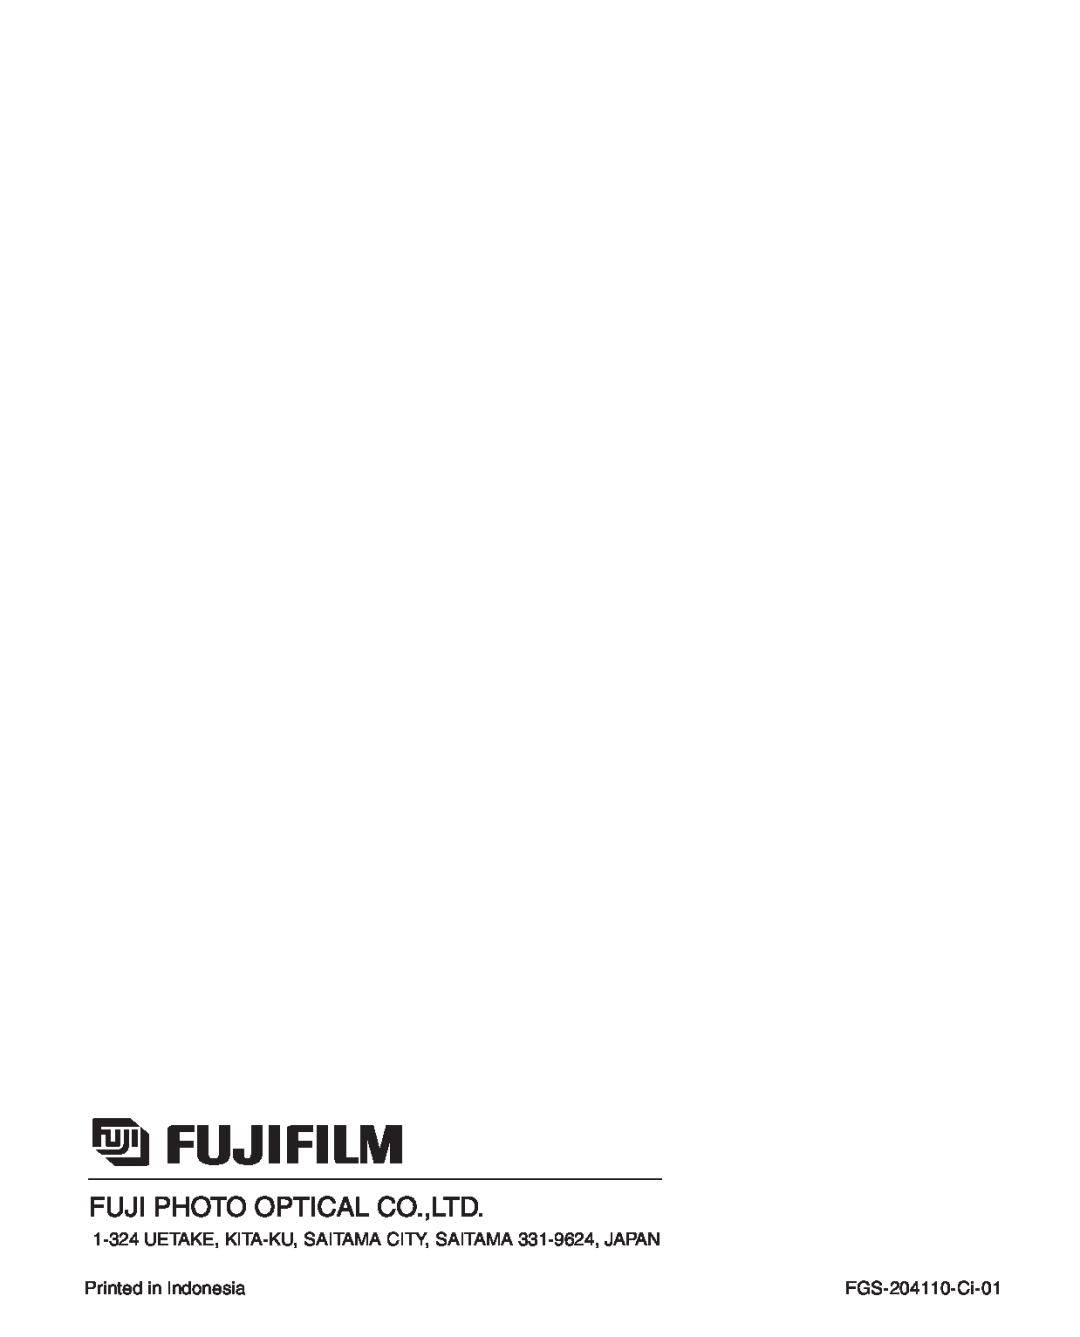 FujiFilm Zoom Date 160ez UETAKE, KITA-KU, SAITAMA CITY, SAITAMA 331-9624, JAPAN, Printed in Indonesia, FGS-204110-Ci-01 